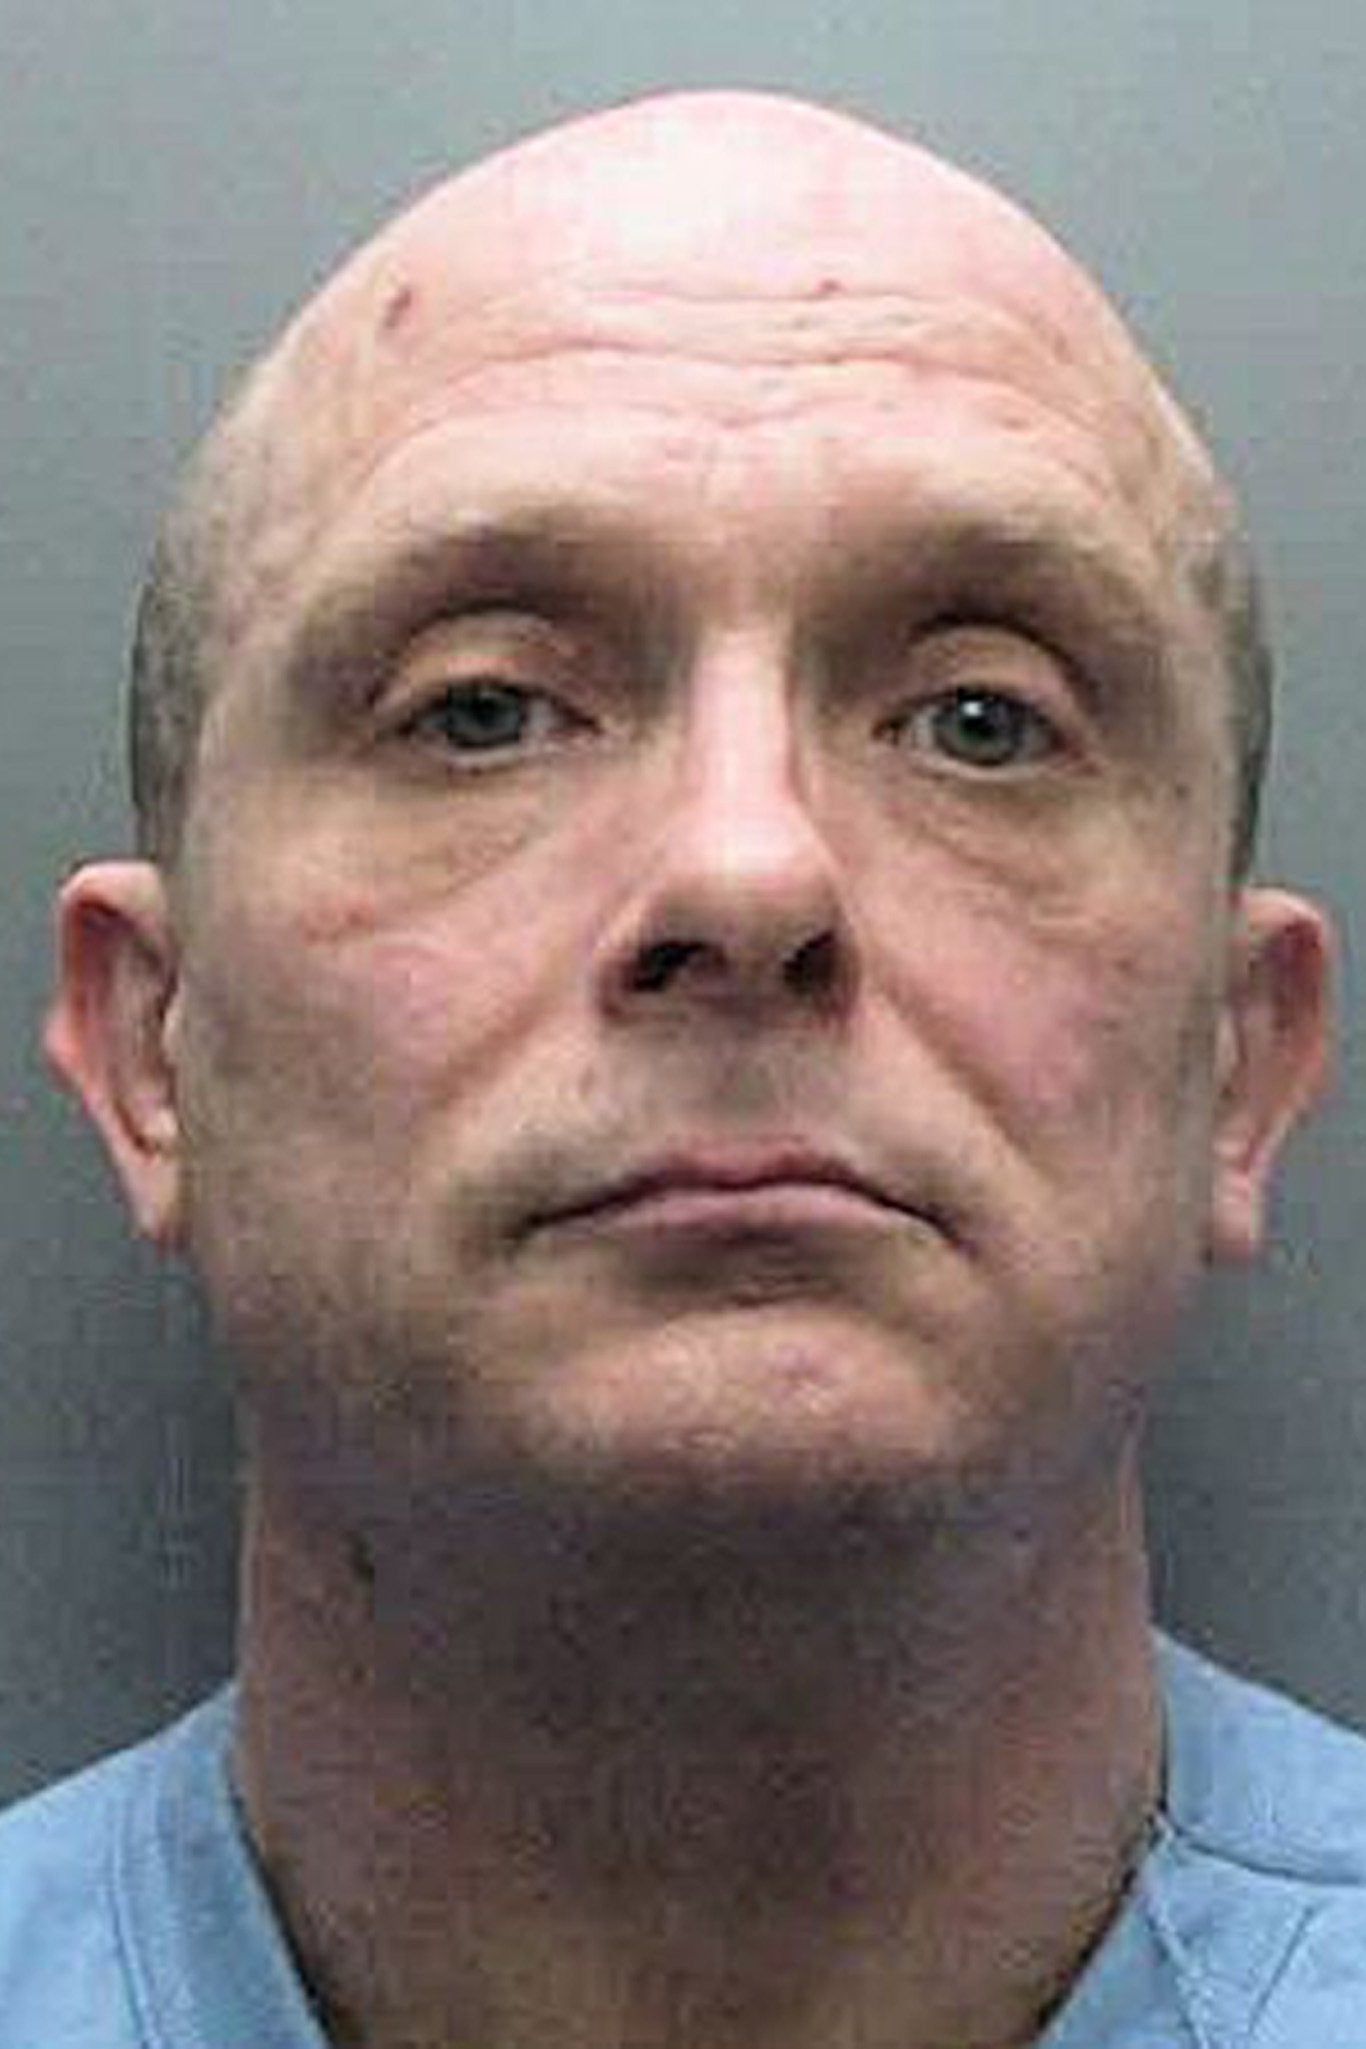 Convicted sex offender Russell Bishop denies murdering Karen Hadaway and Nicola Fellows